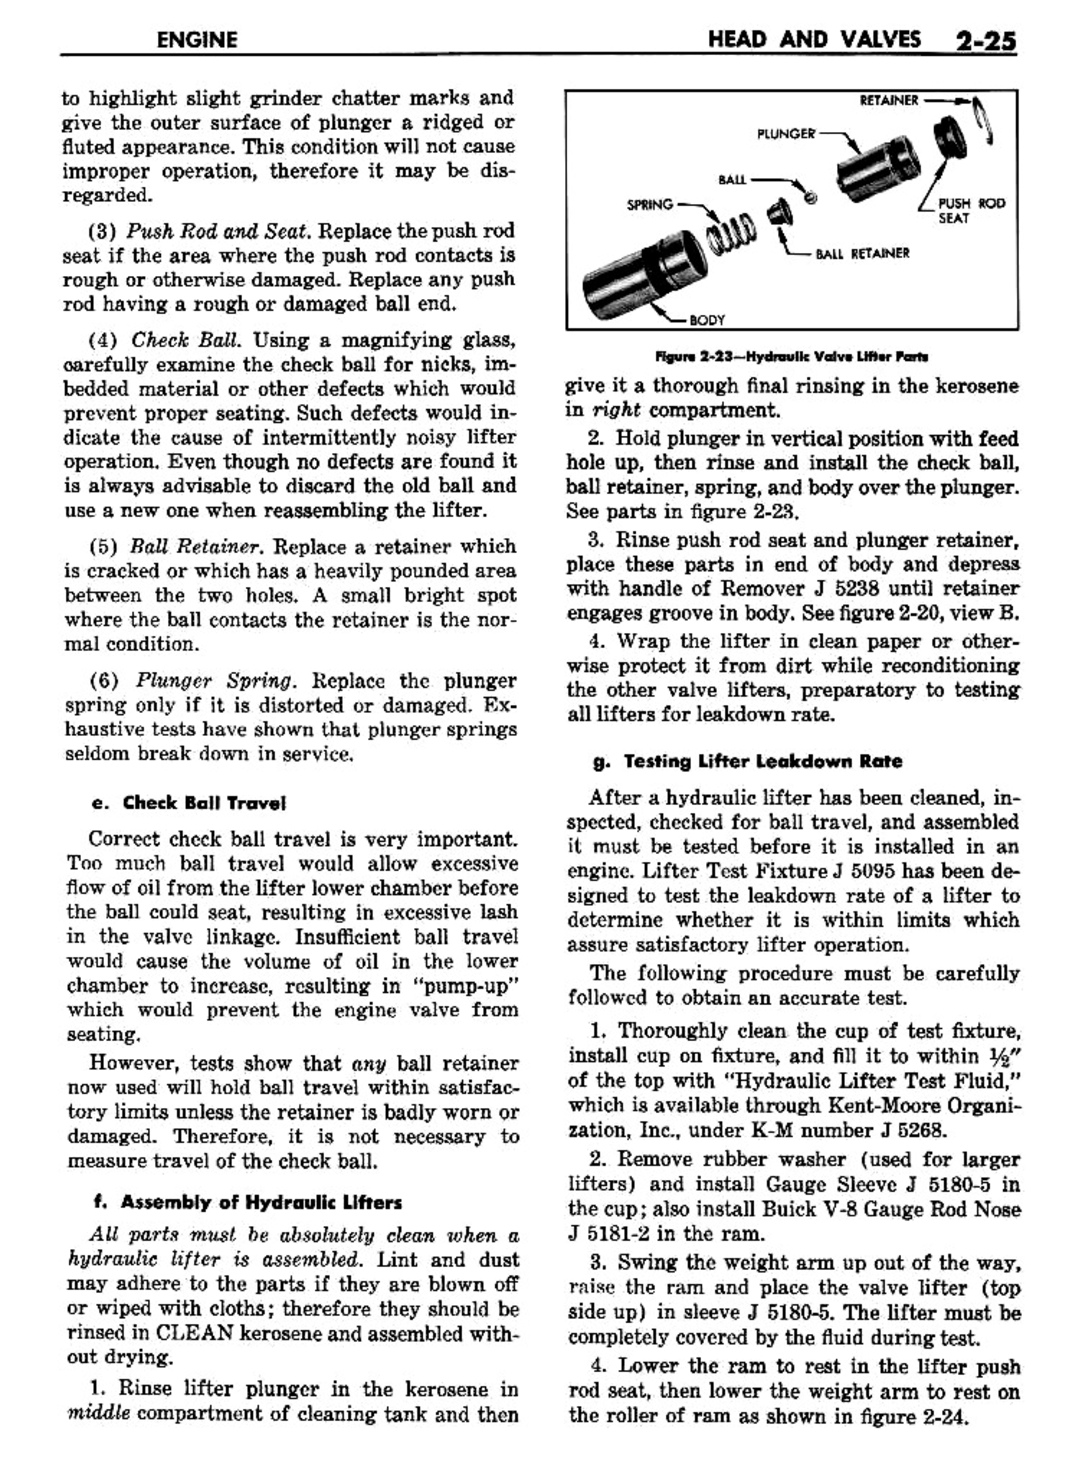 n_03 1957 Buick Shop Manual - Engine-025-025.jpg